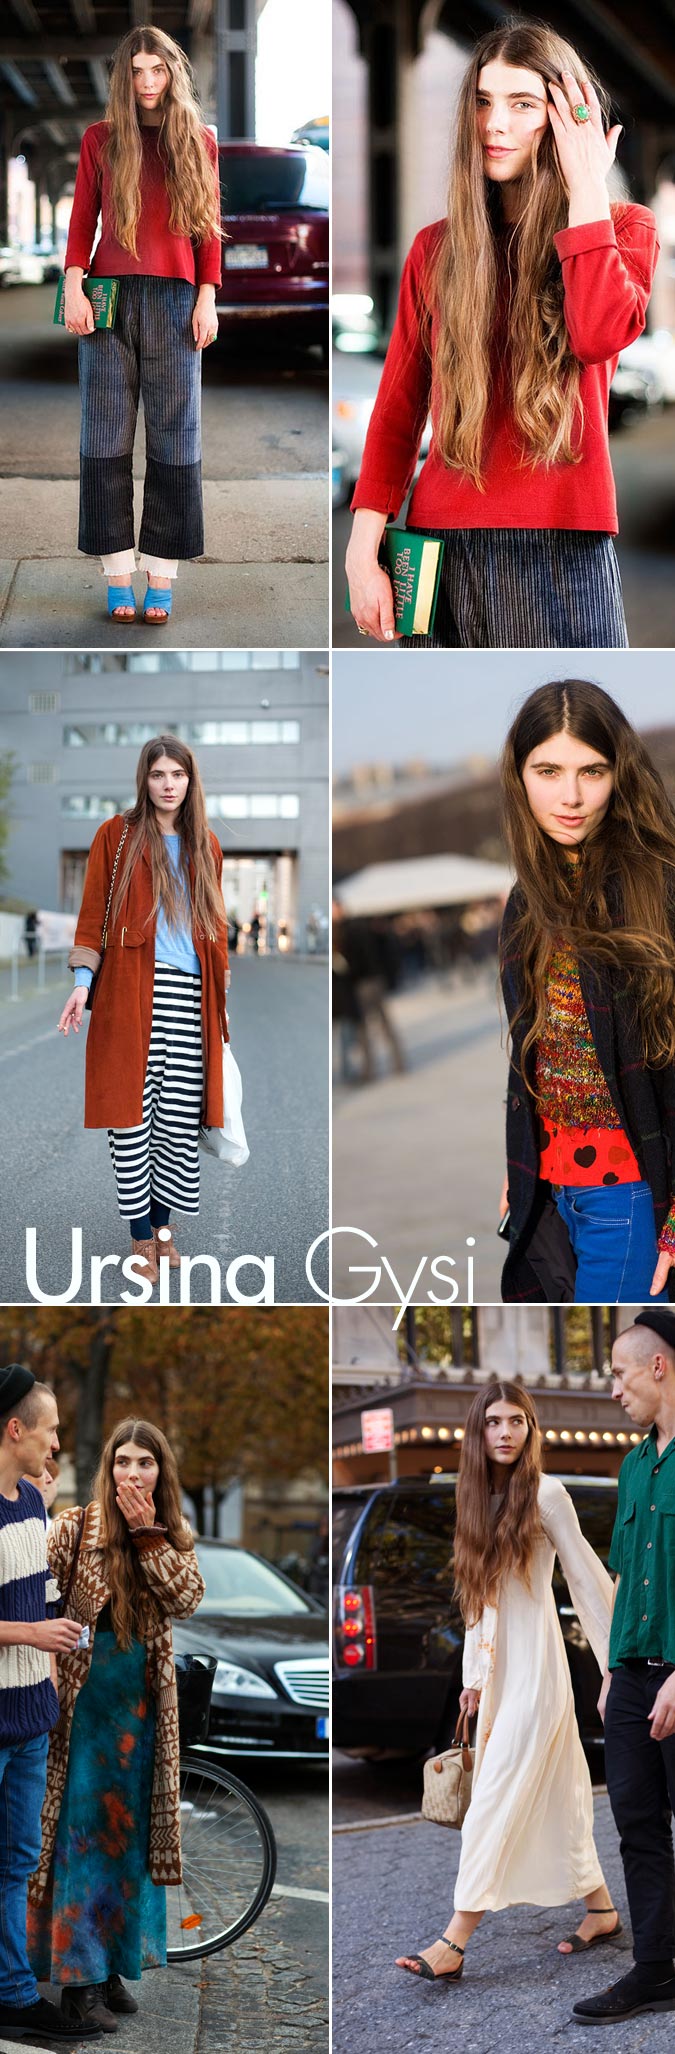 Style File: Ursina Gysi